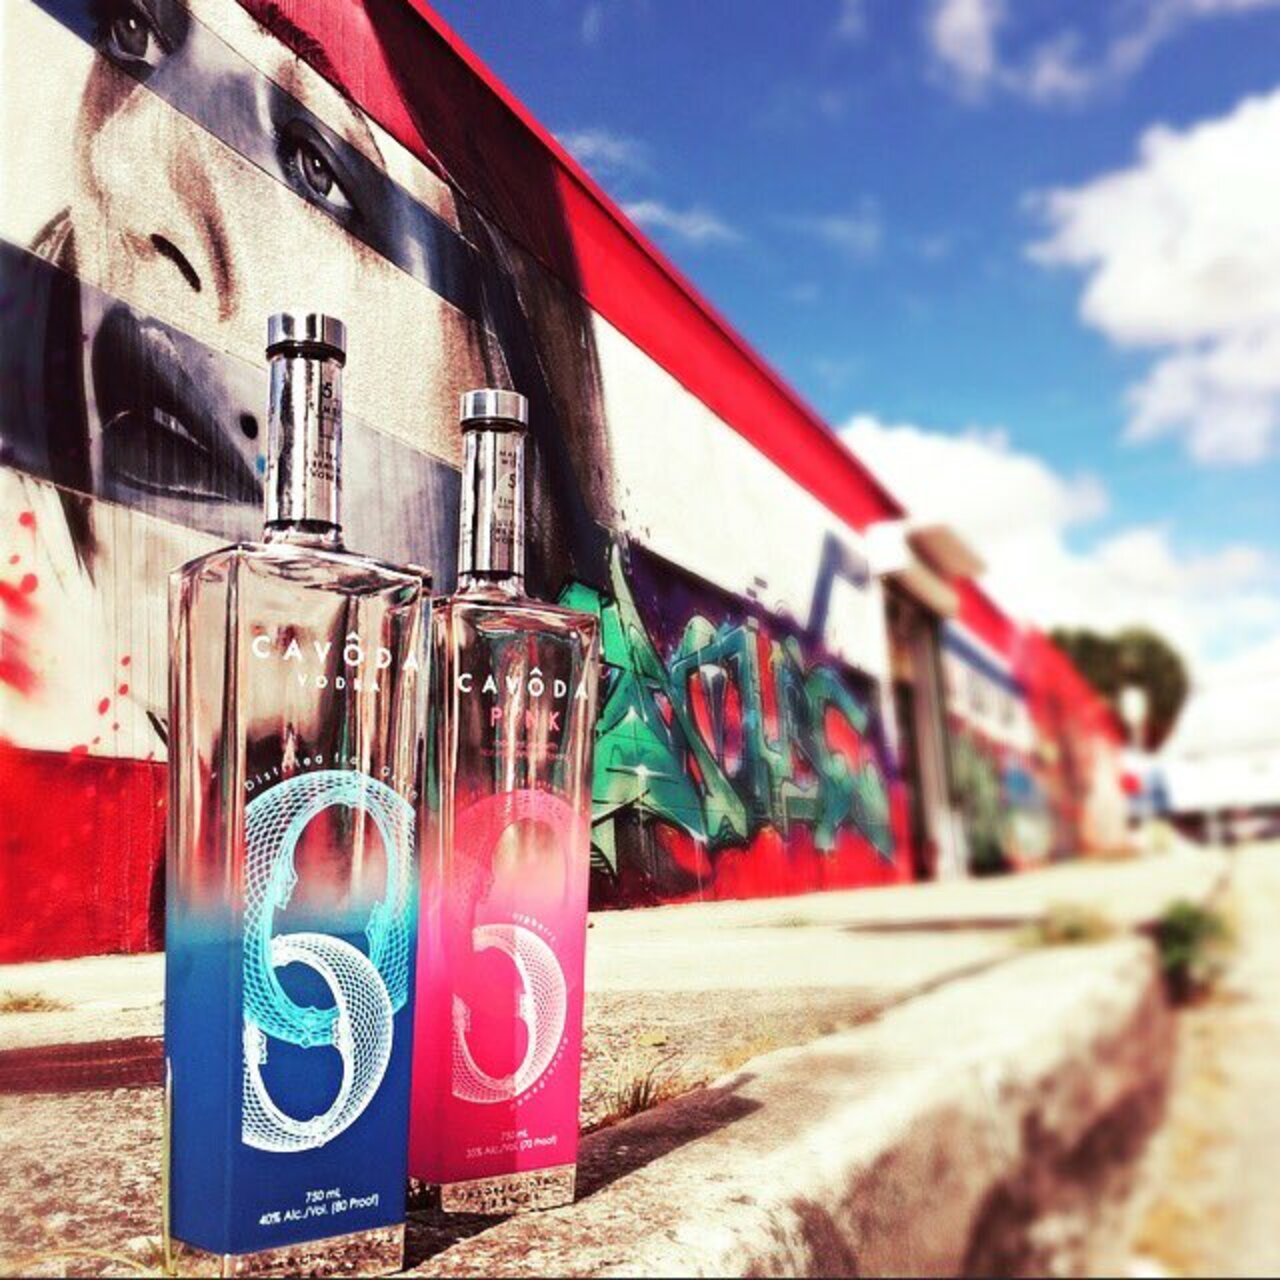 RT @CavodaVodka: Light Up Your Life! # #cavoda #cavodavodka #cavodapink #blue #pink #drinkpink #art #streetart #graffiti #miami https://t.co/bQlrtW3TRH